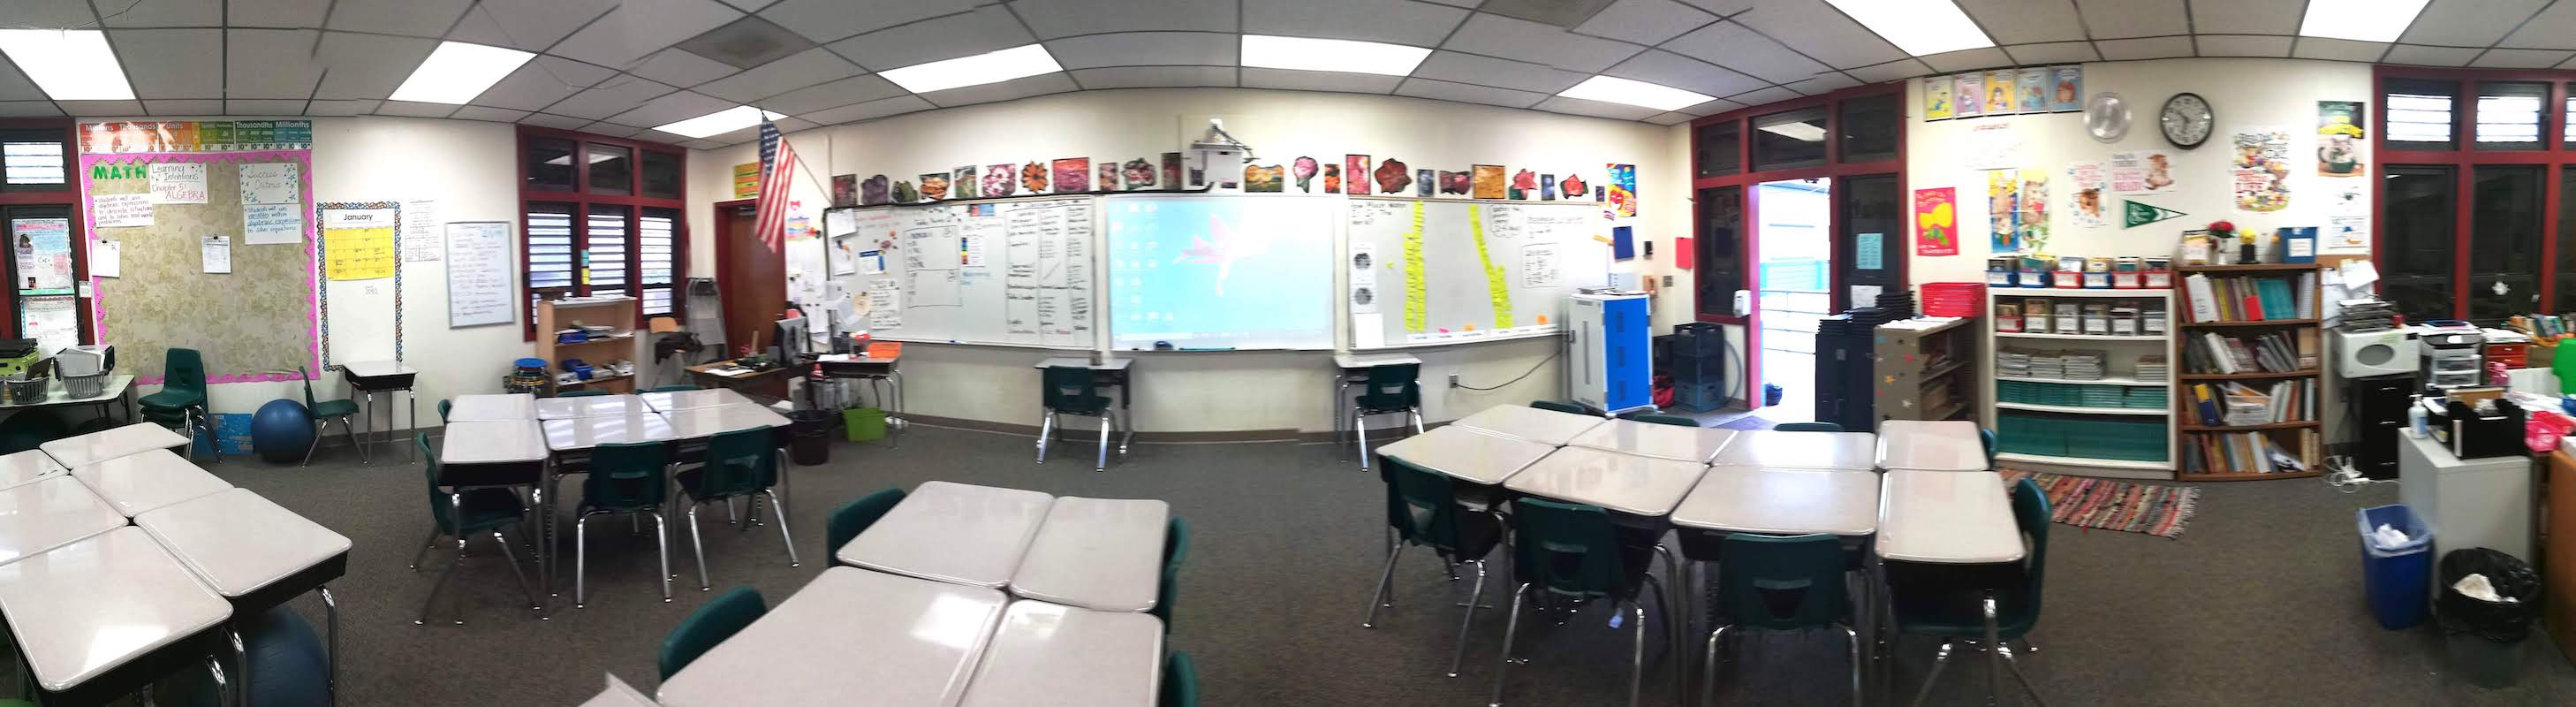 classroom.jpg